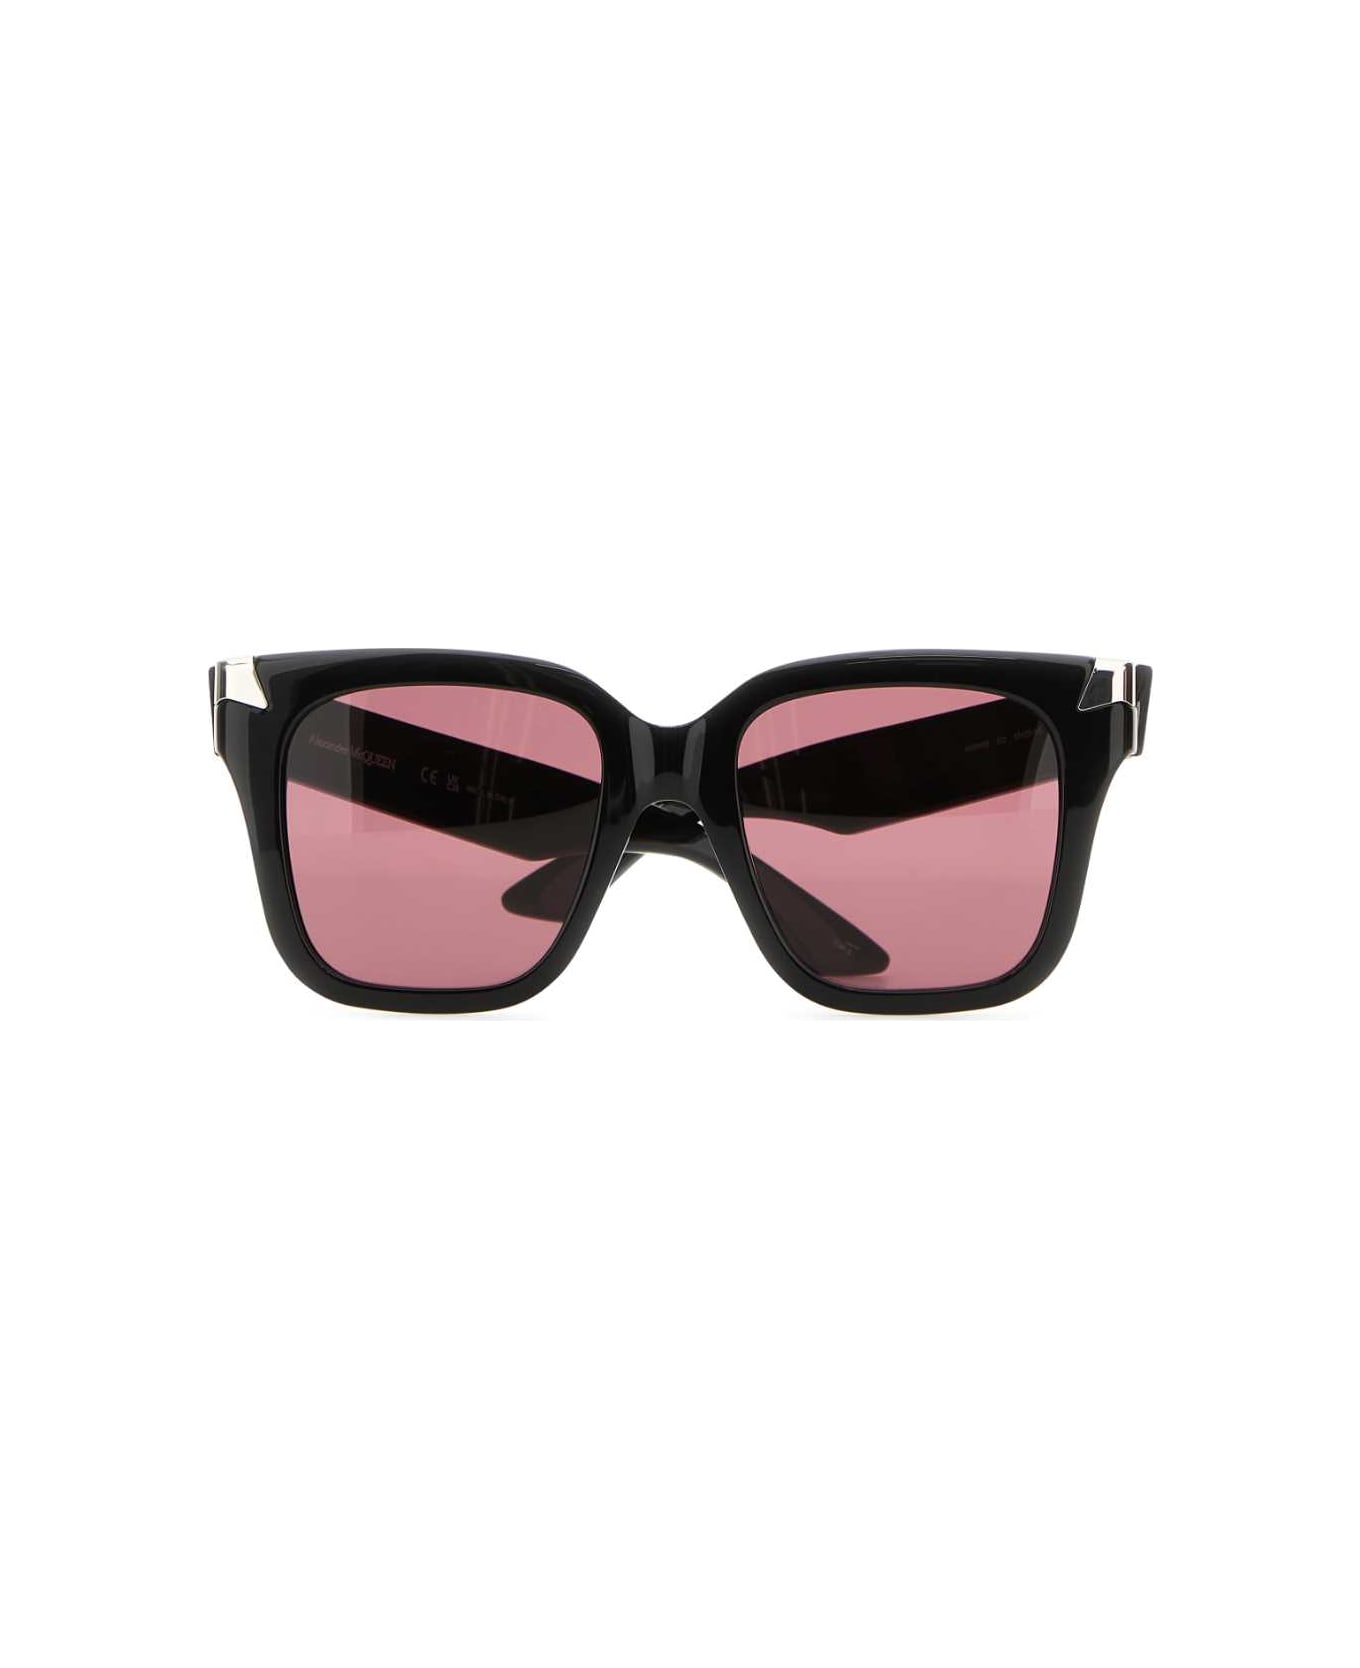 Alexander McQueen Black Acetate Punk Rivet Sunglasses - BLACKBLACKVIOLET サングラス